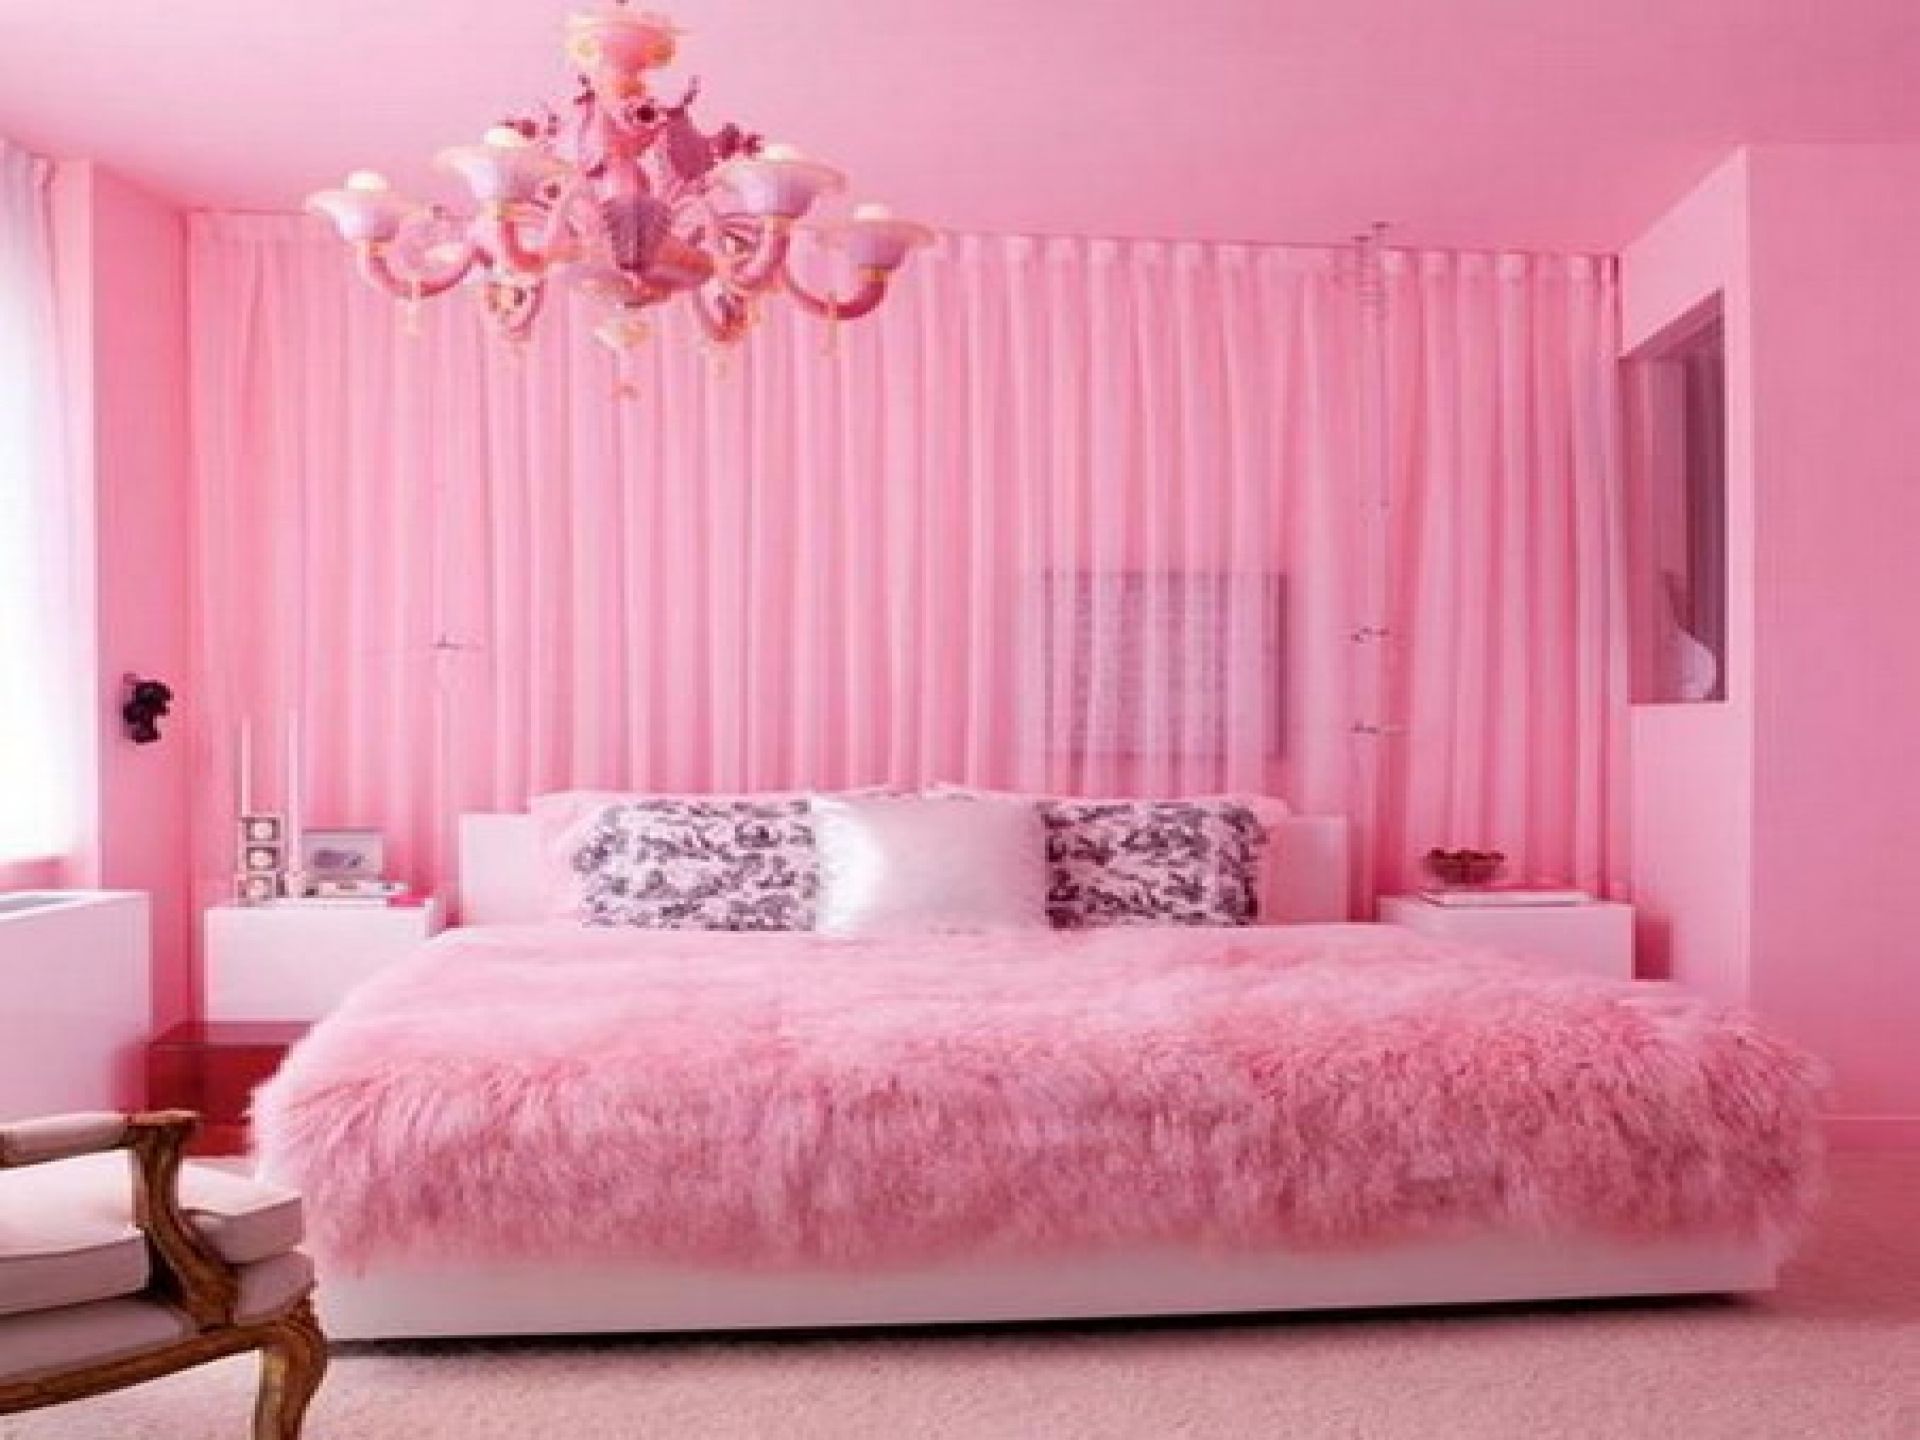 Tropical Bedroom In Pastel Pink